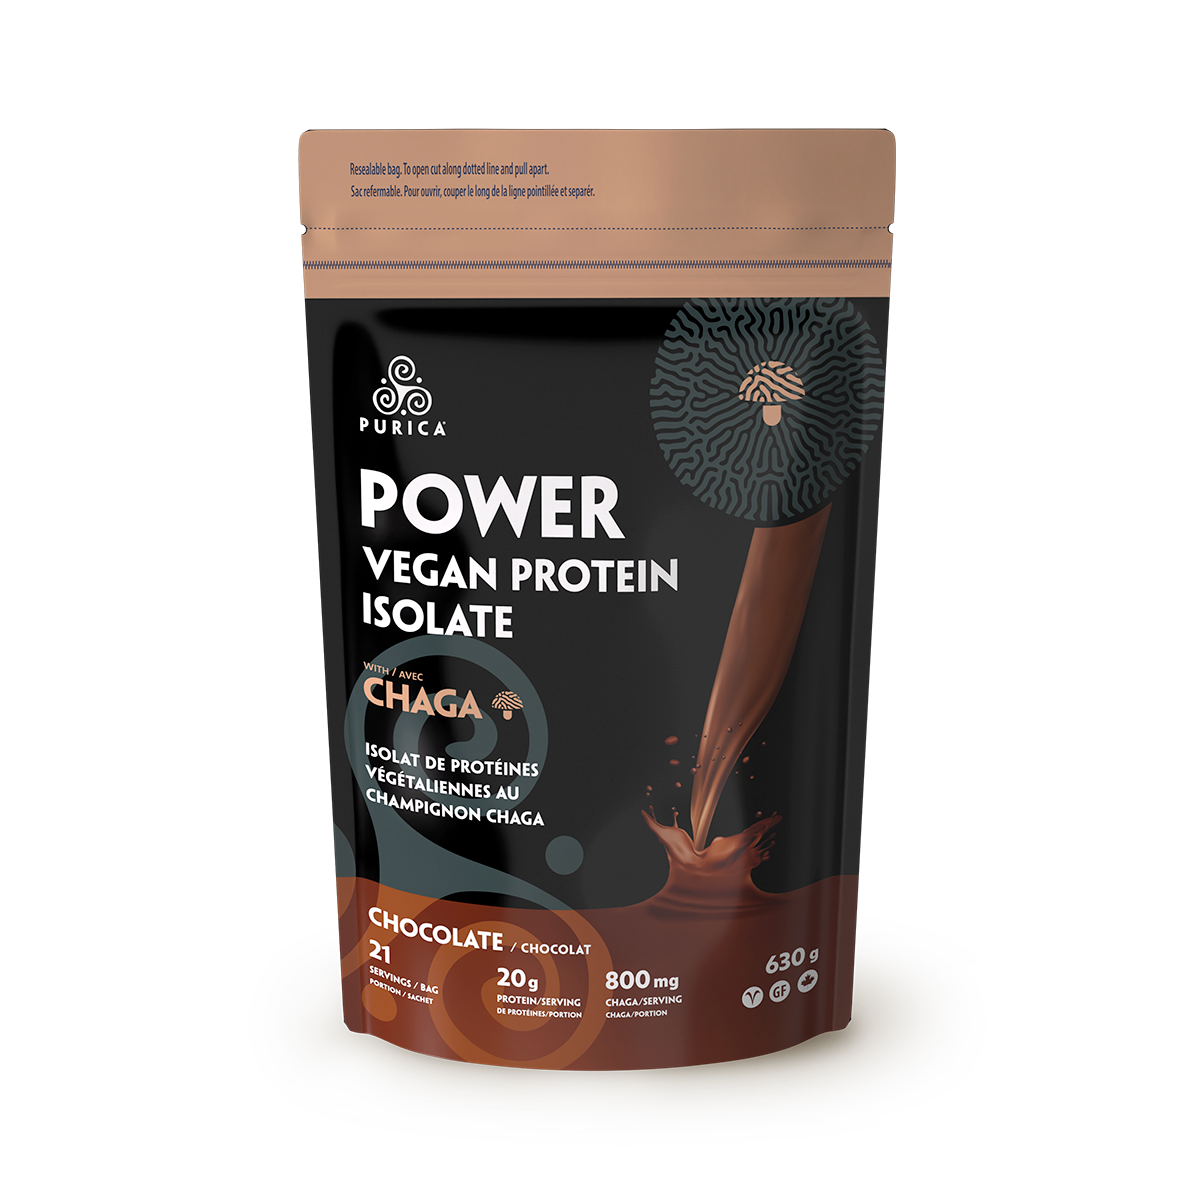 Vegan Protein with Chaga